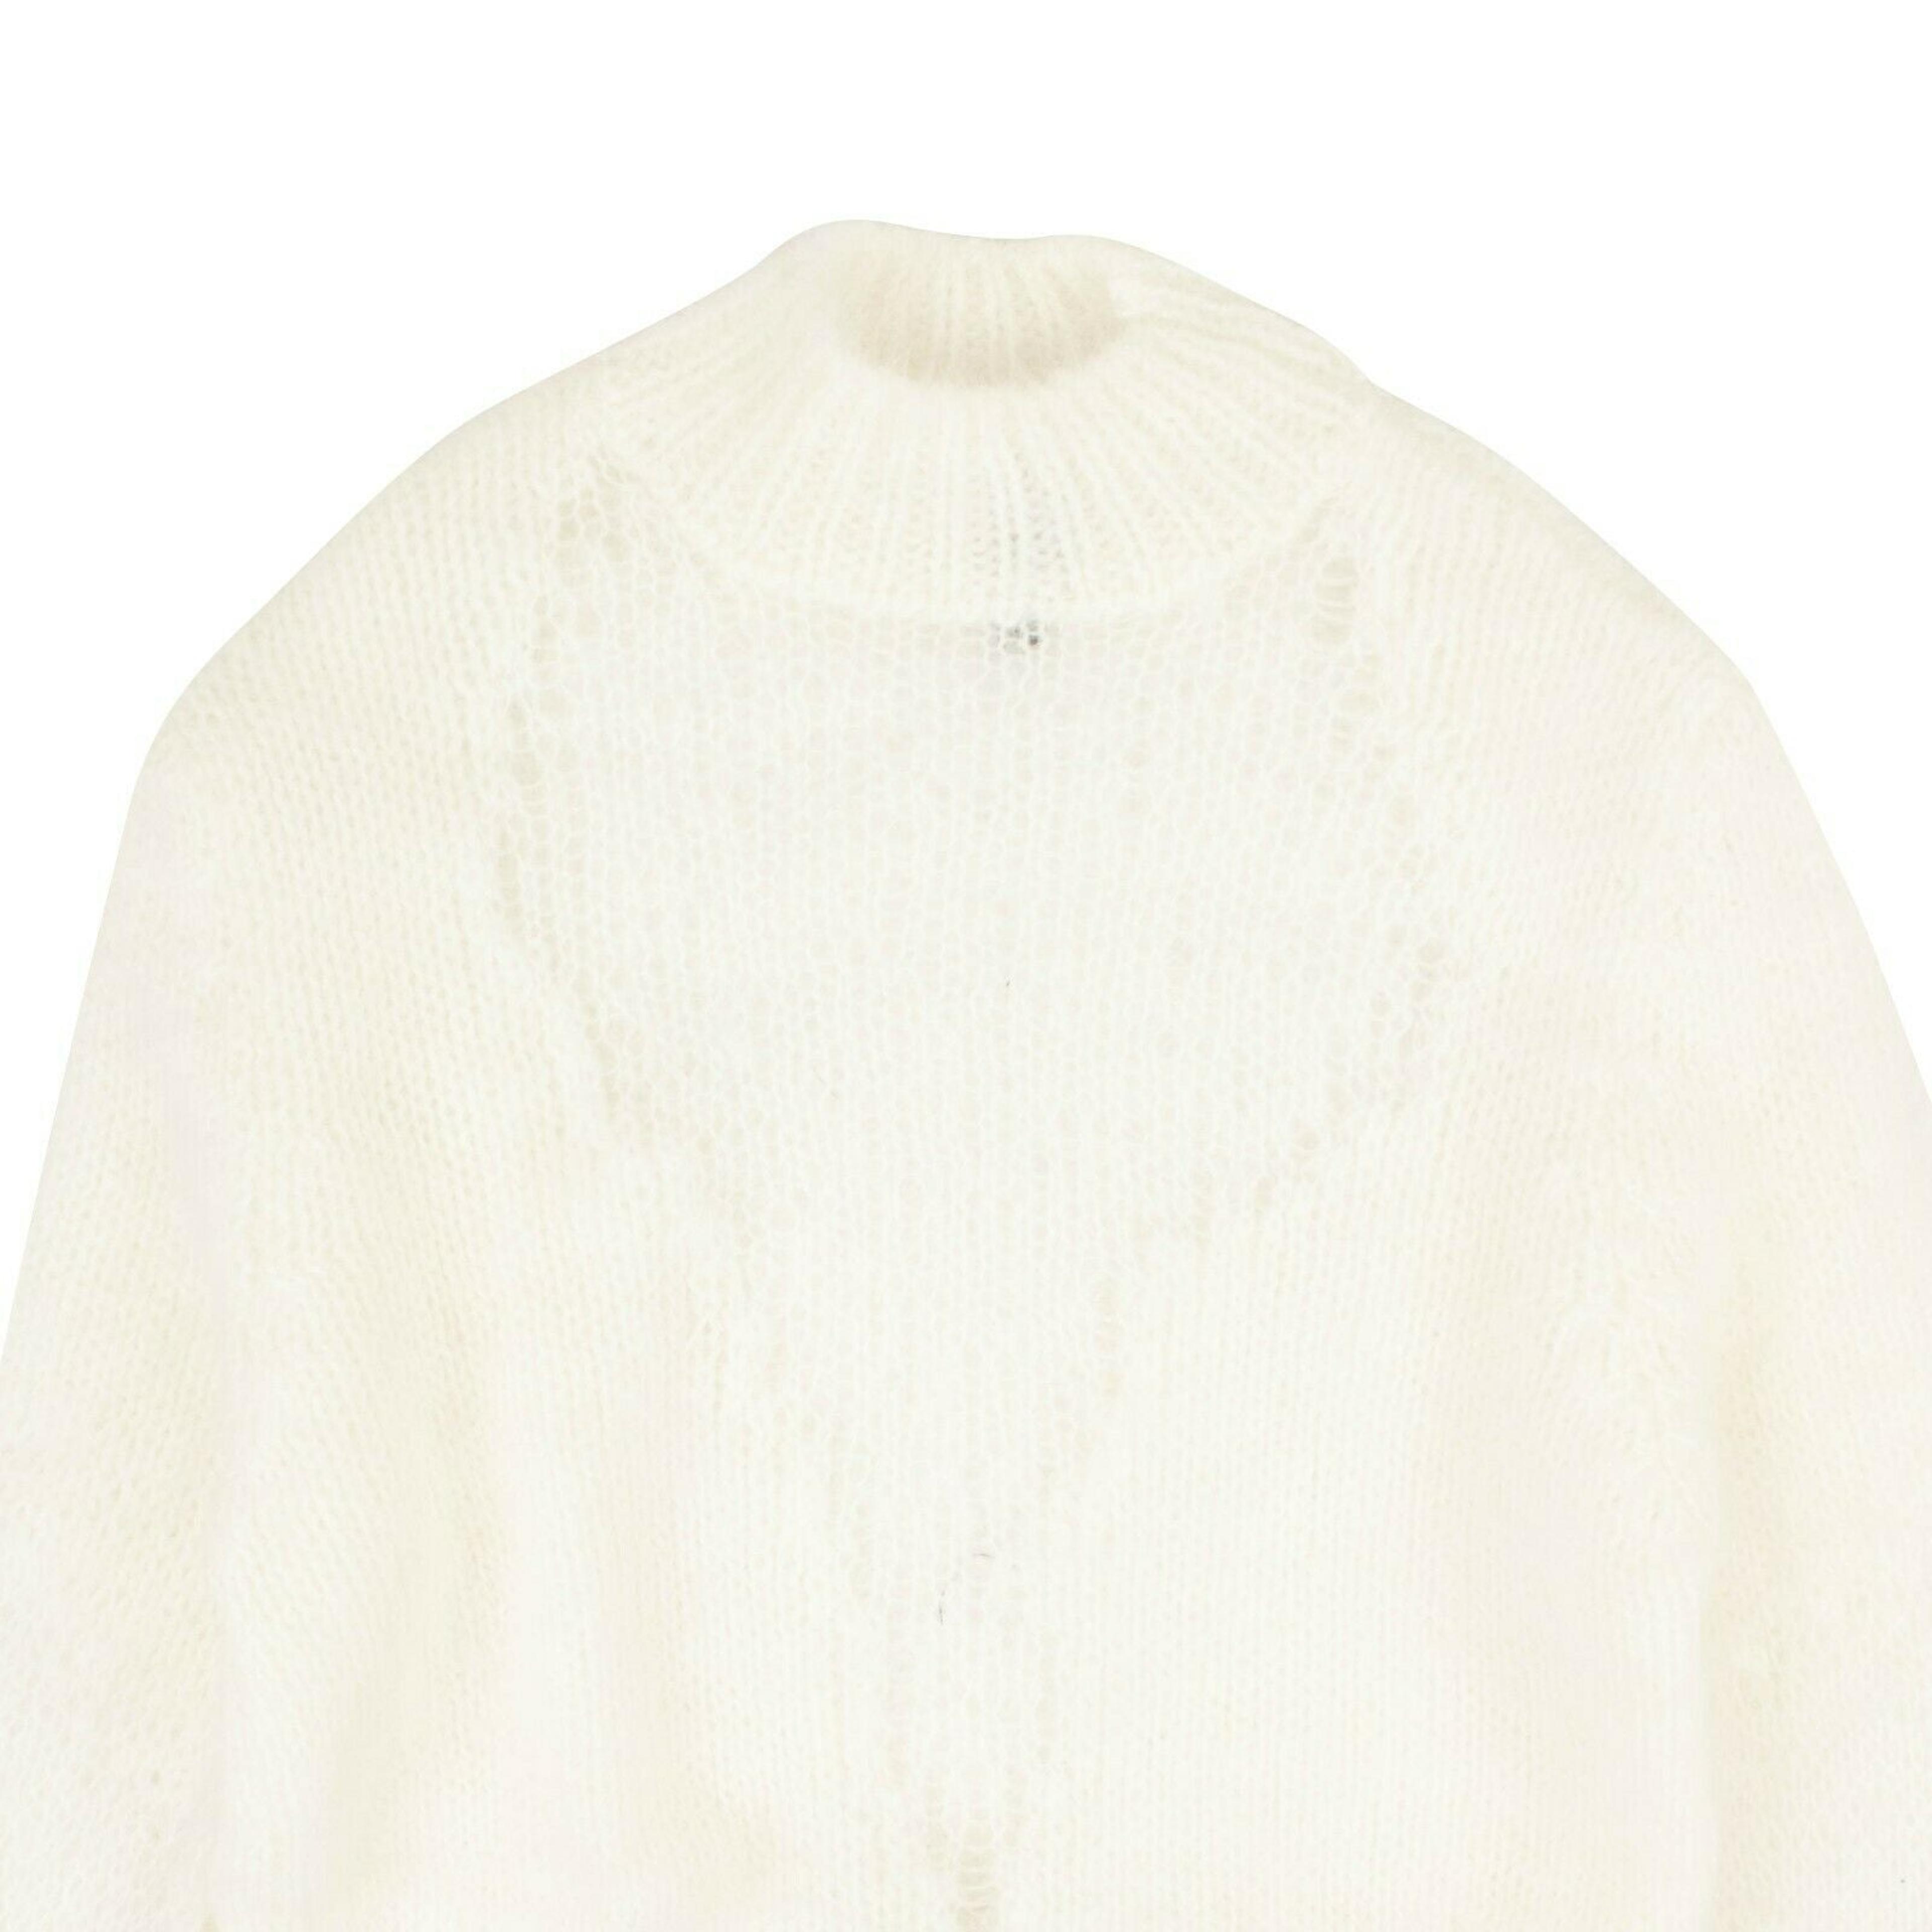 Alternate View 2 of White Alpaca Slim-Fit Sweater